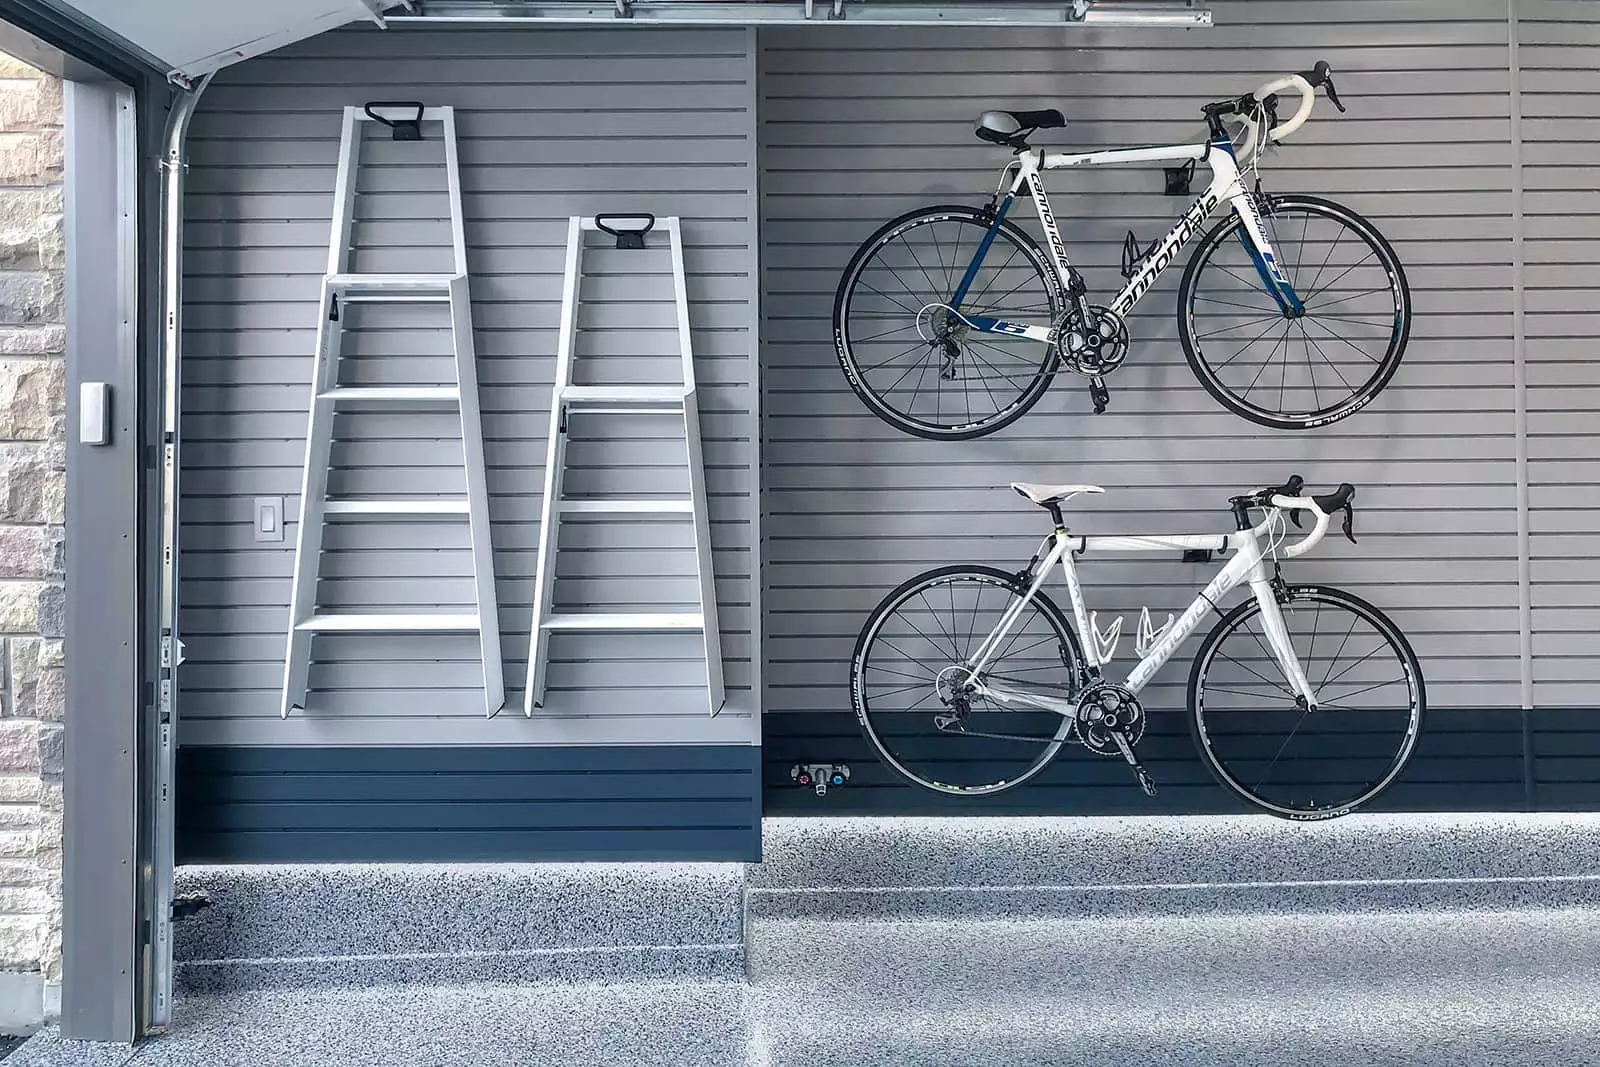 xharbor_blue_slatwall-ladders-bicycles.jpg.pagespeed.ic.6Loj6N6vvy